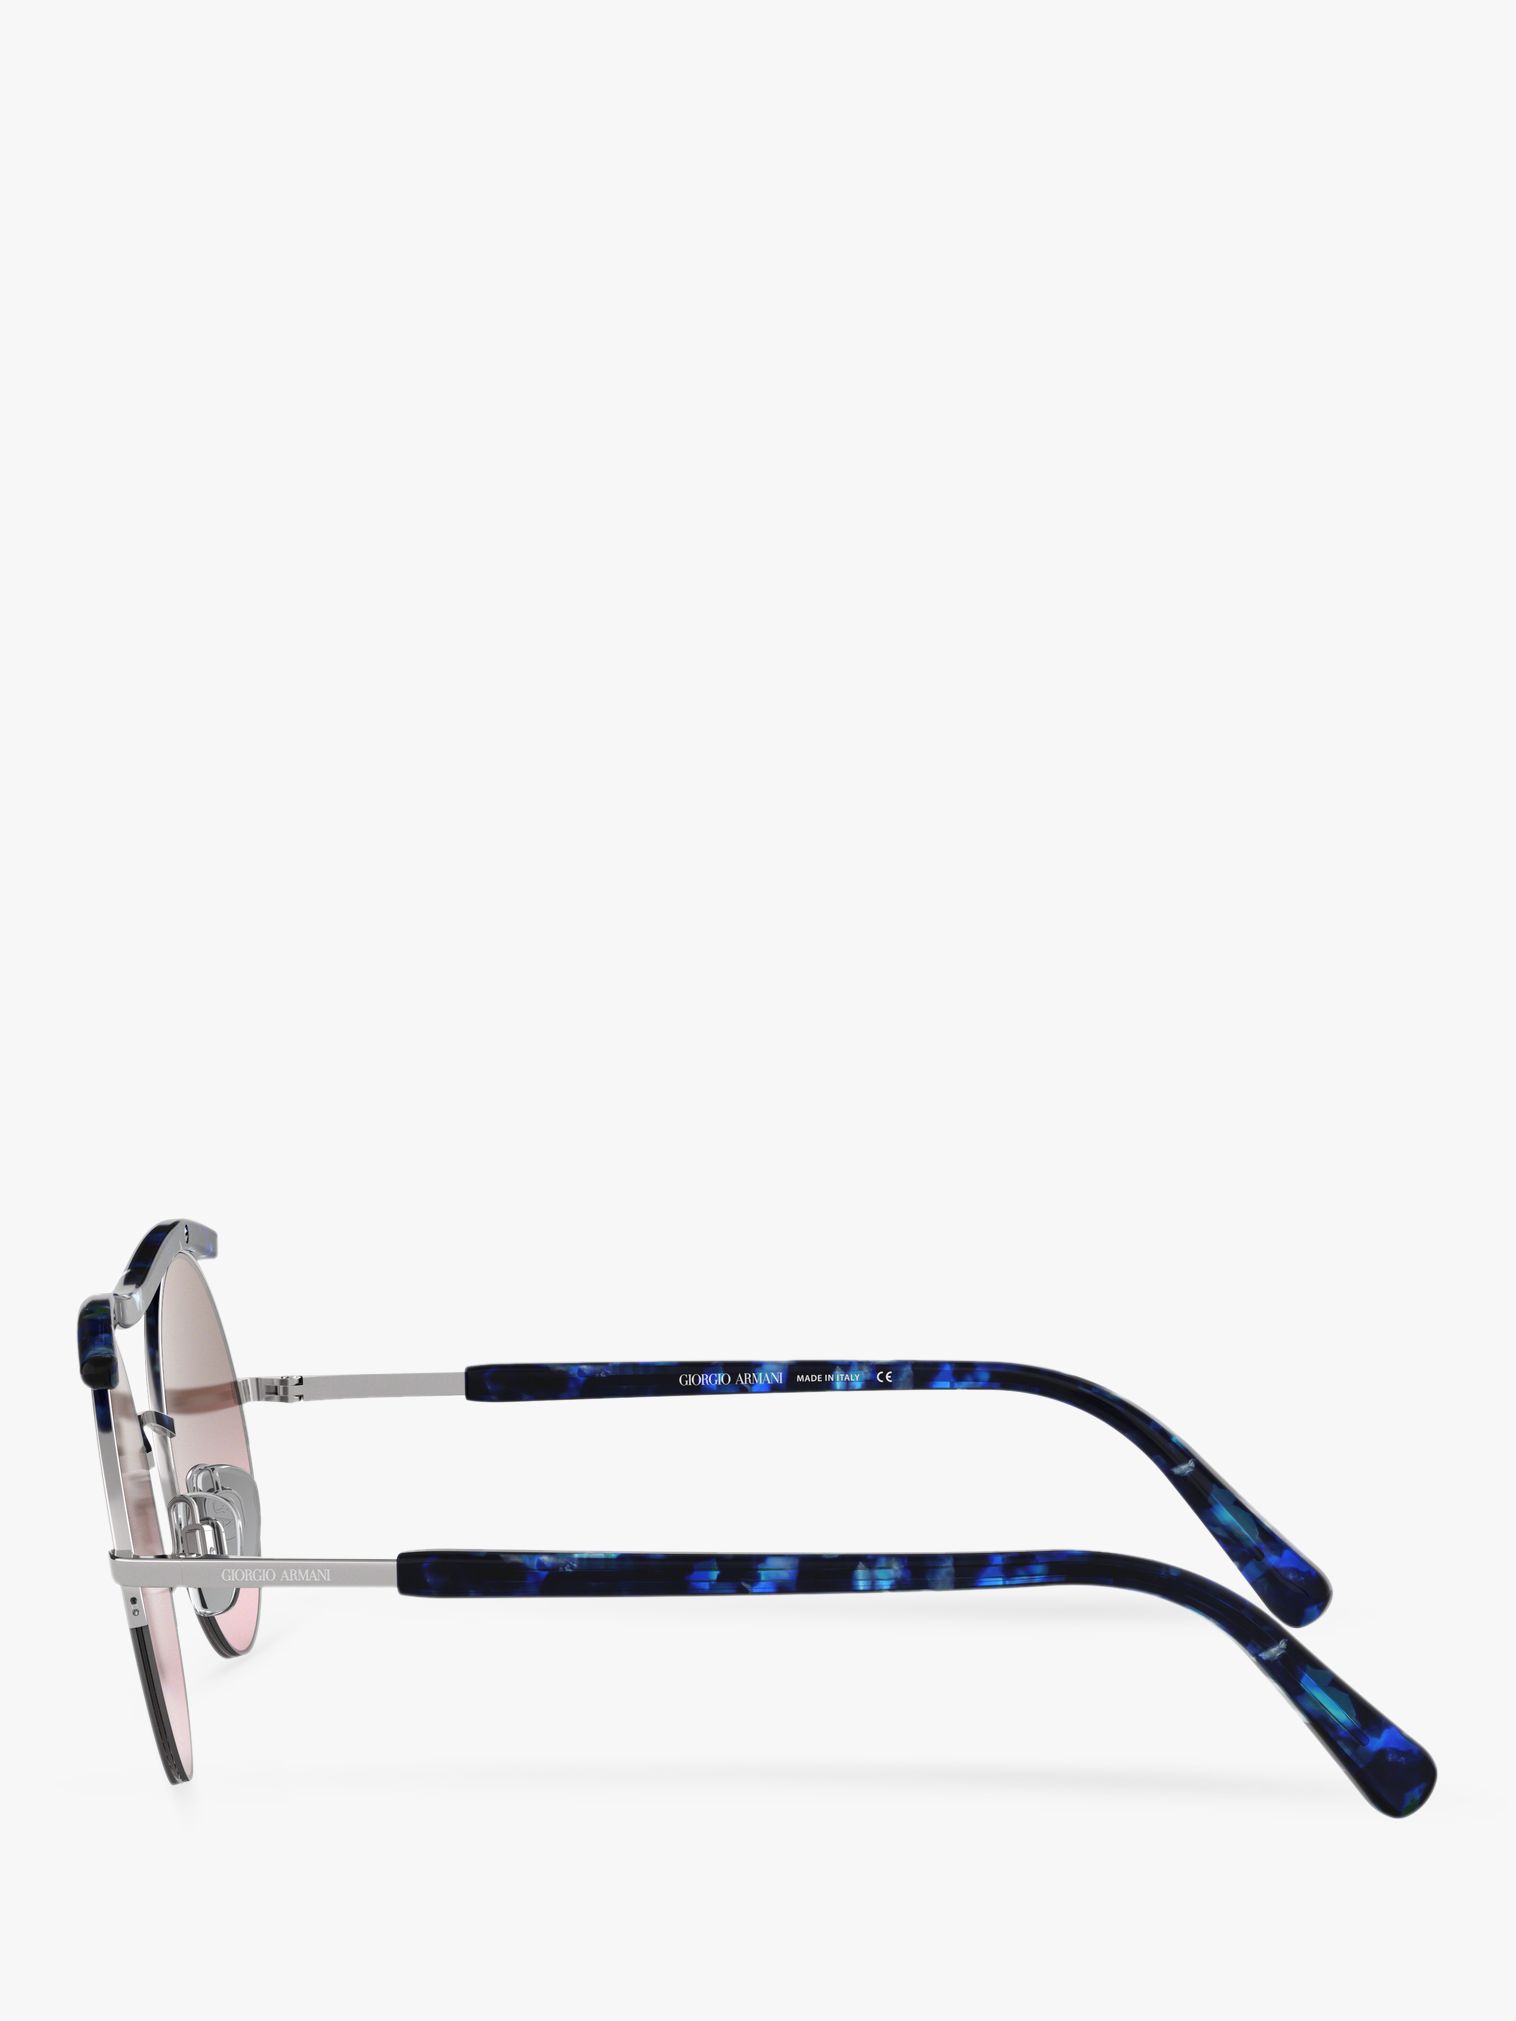 Giorgio Armani AR6082 Women's Round Sunglasses, Tortoise Blue/Purple Gradient